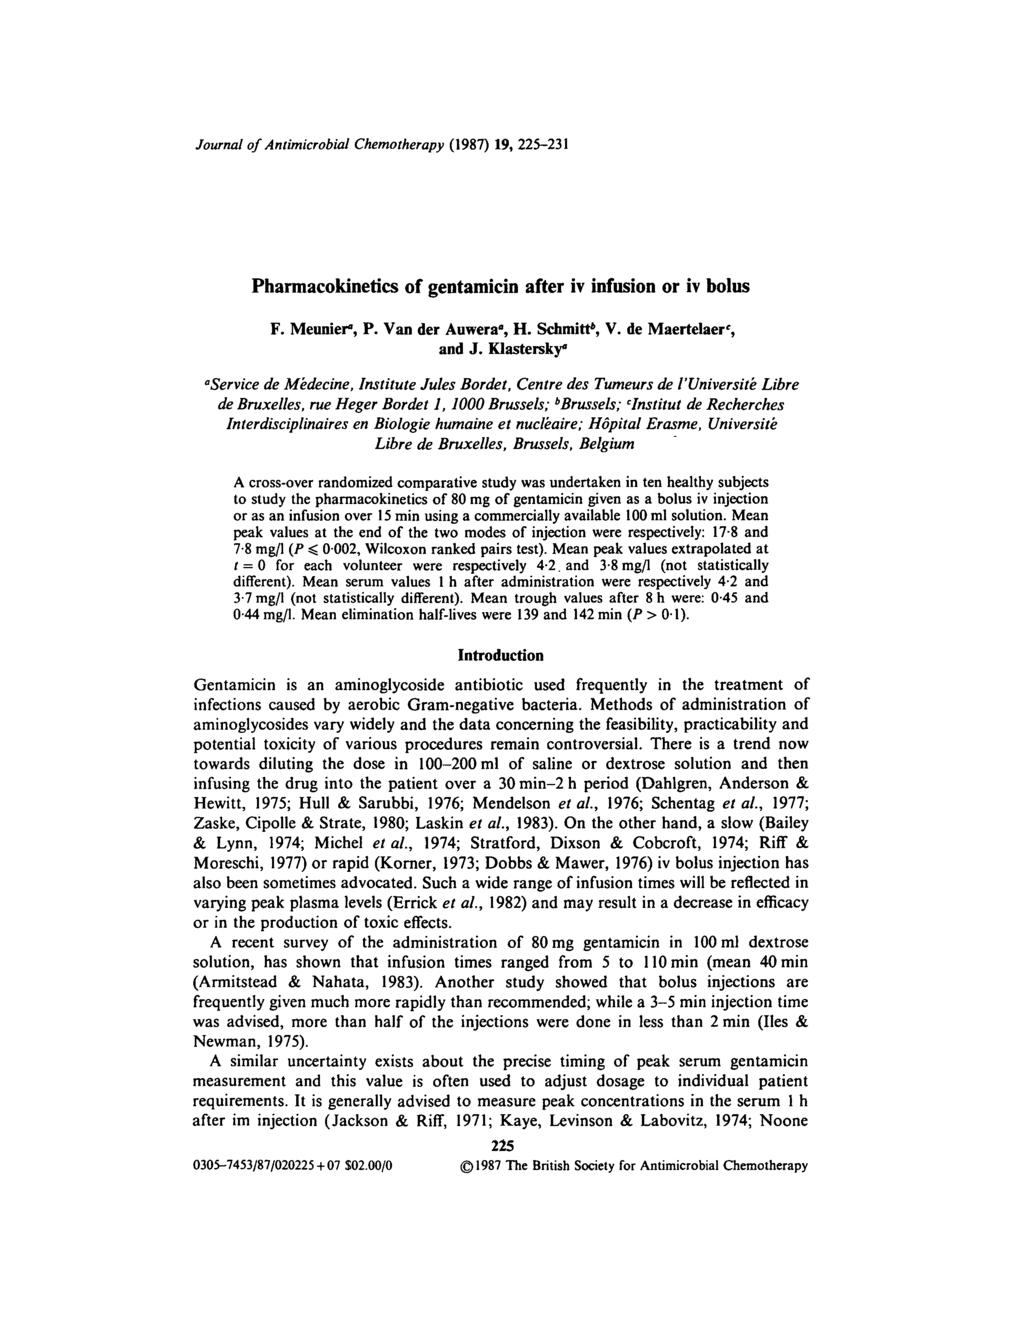 Journal of Antimicrobial Chemotherapy (1987) 19, 225-231 Pharmacokinetics of gentamicin after iv infusion or iv bolus F. Meunier", P. Van der Auwera", H. Schmitt*, V. de Maertelaer', and J.